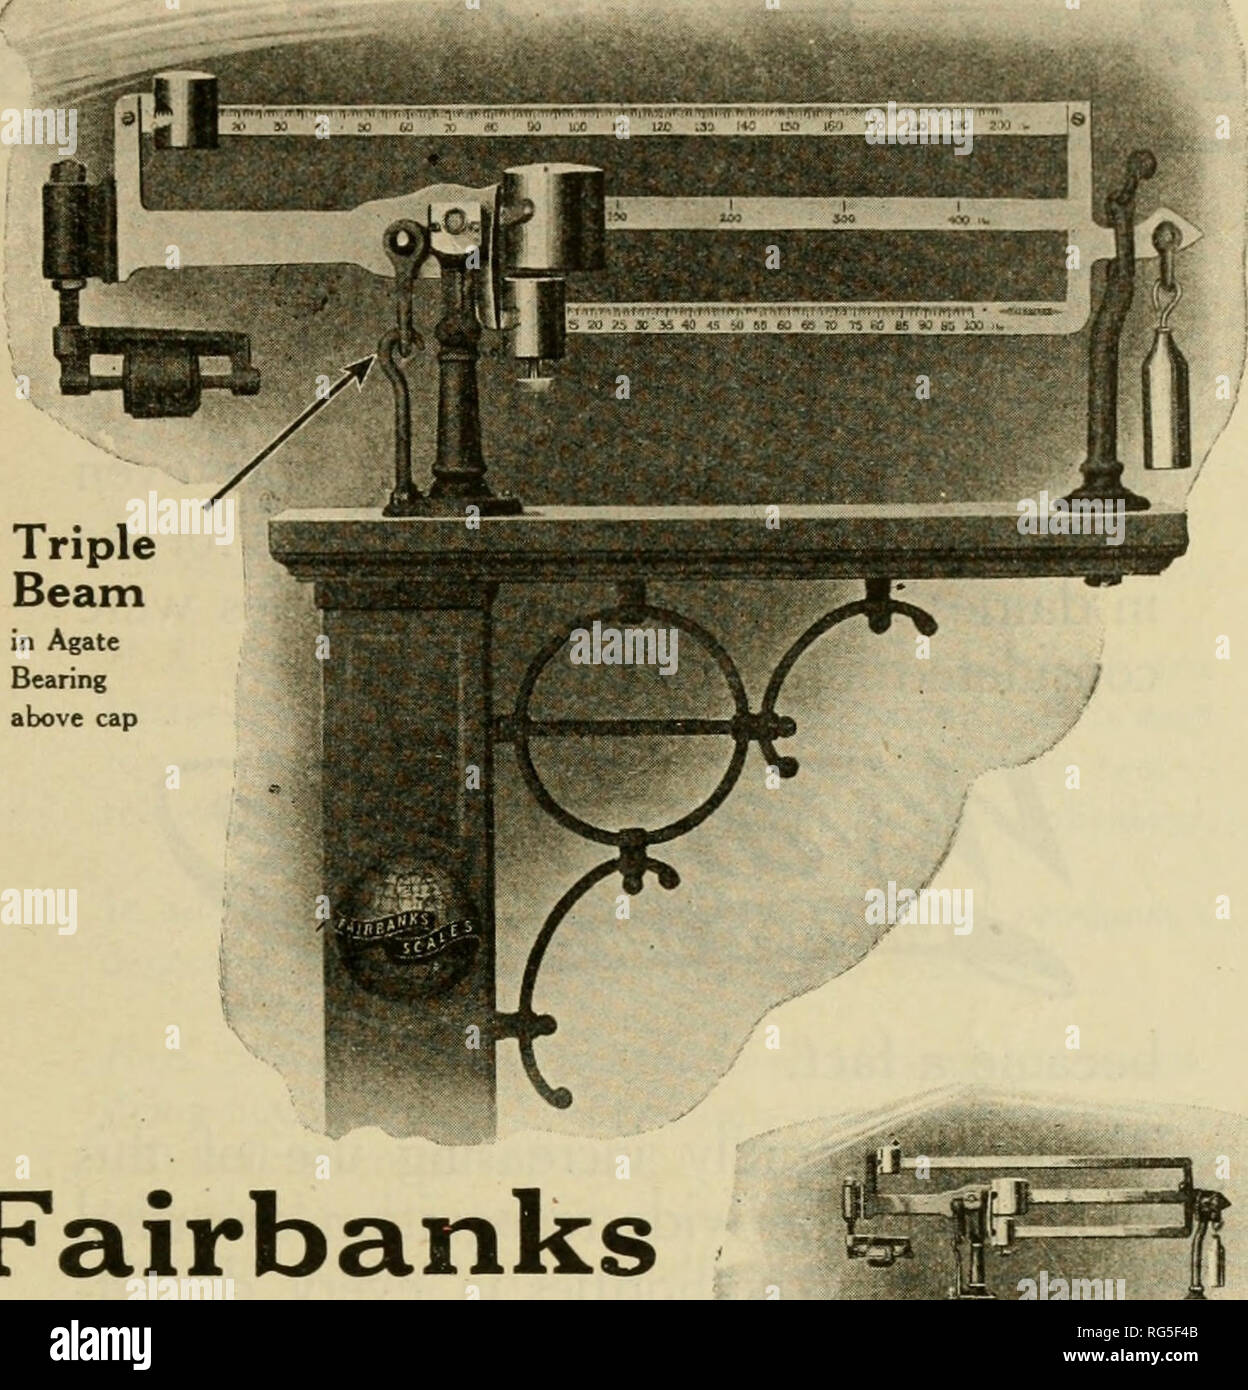 Fairbanks 55652 Beam Balance Floor Scale, Graduated Beam